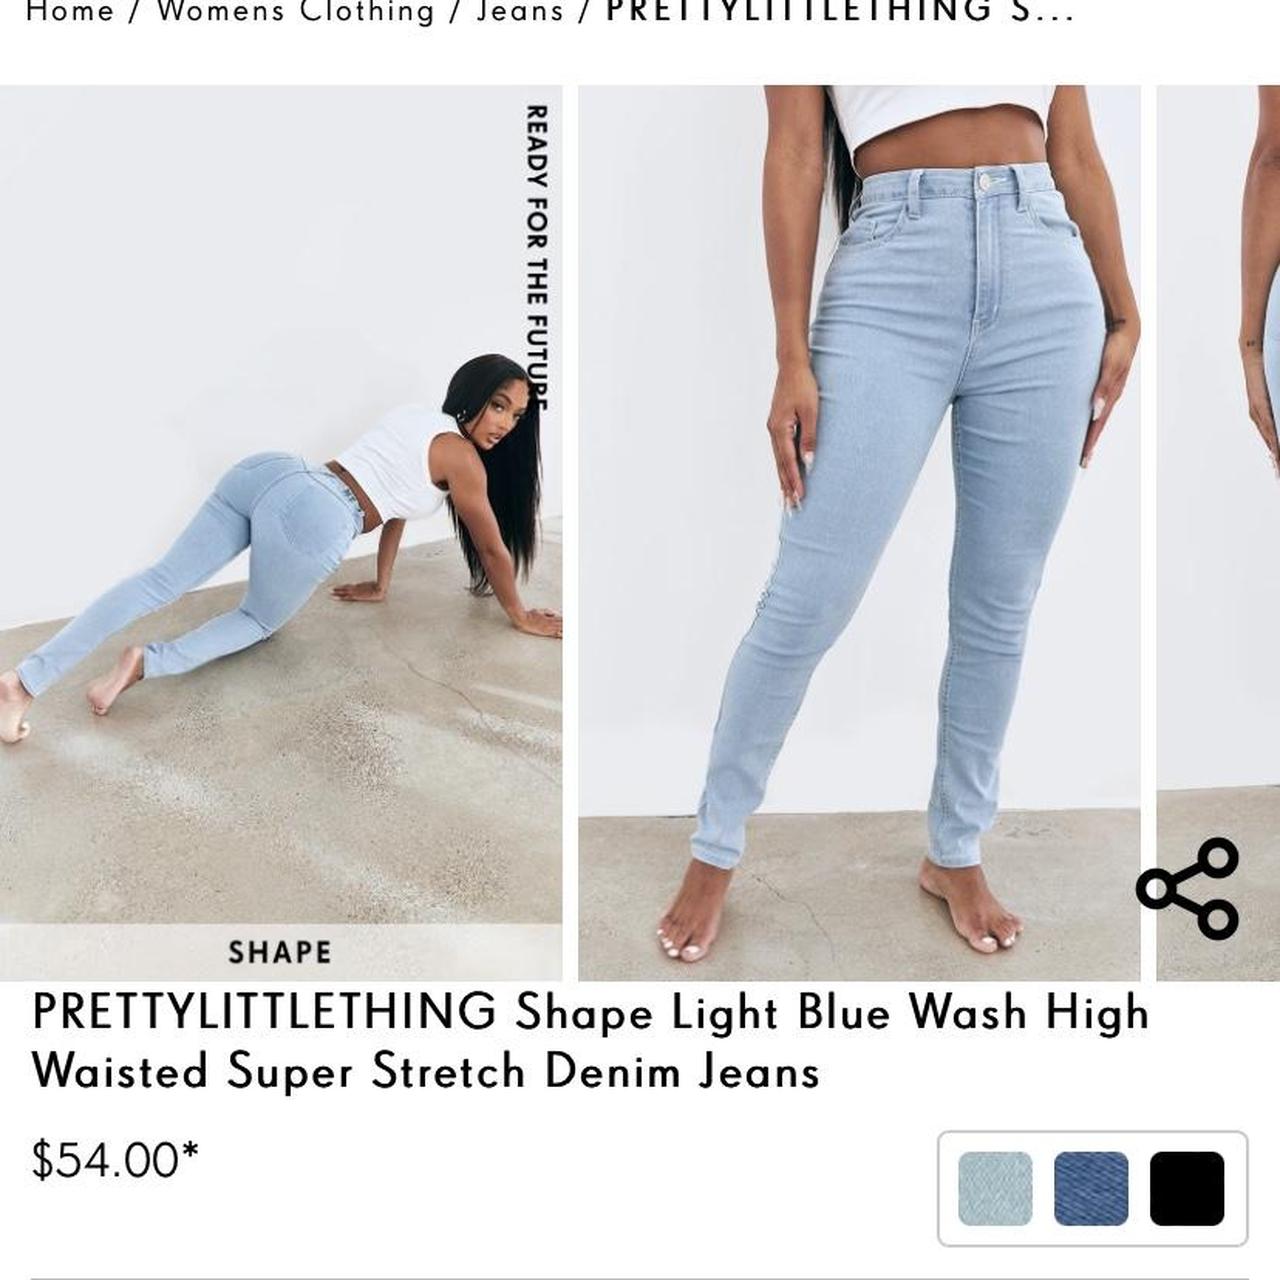 PRETTYLITTLETHING Shape Light Blue Wash Super High Waist Skinny Jeans